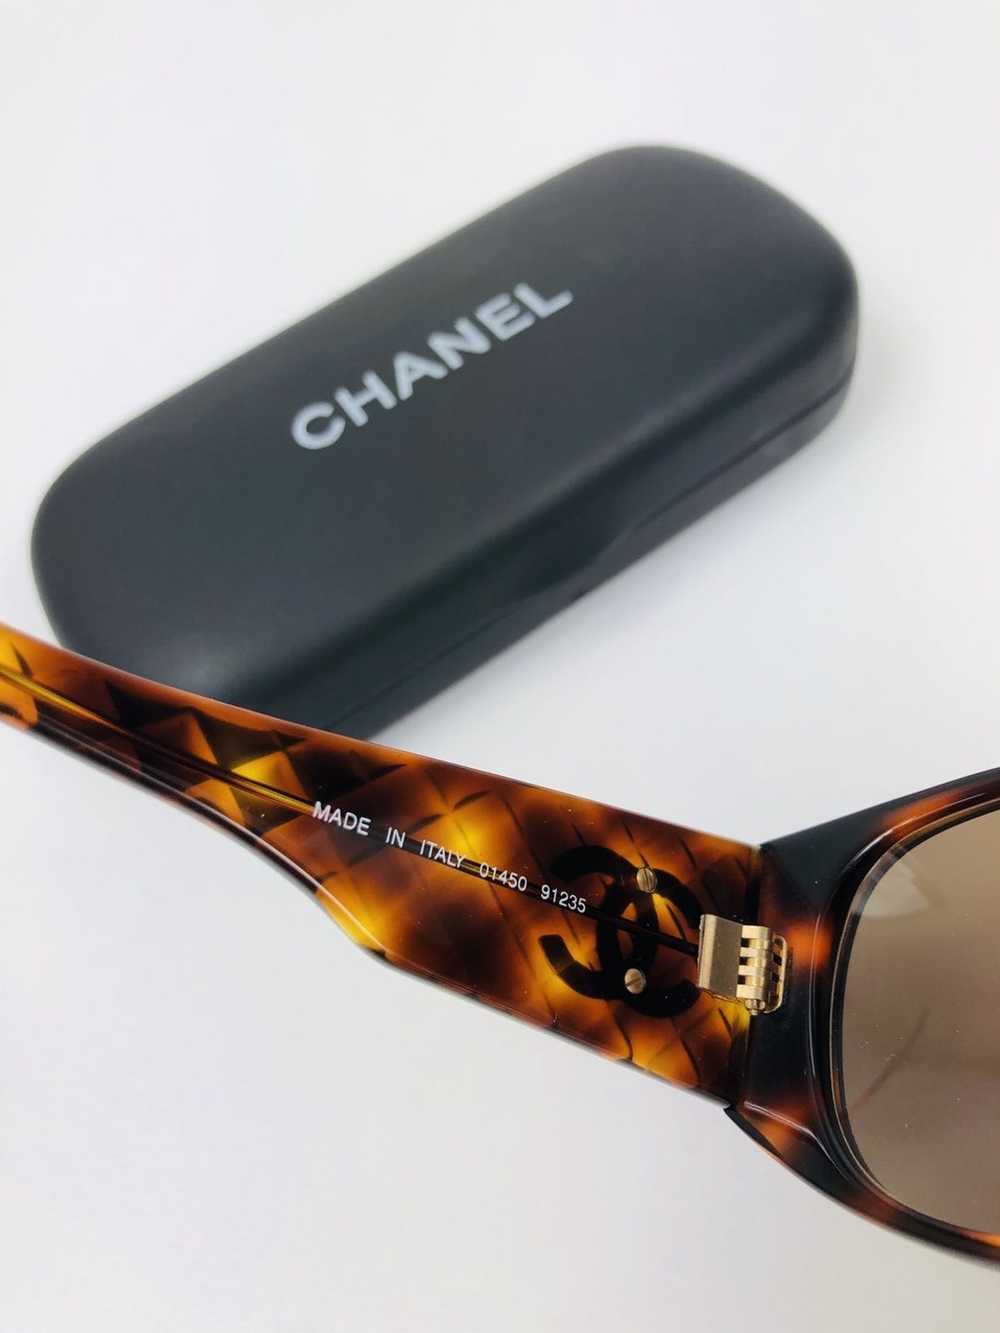 Chanel Chanel cc logo sunglasses - image 4